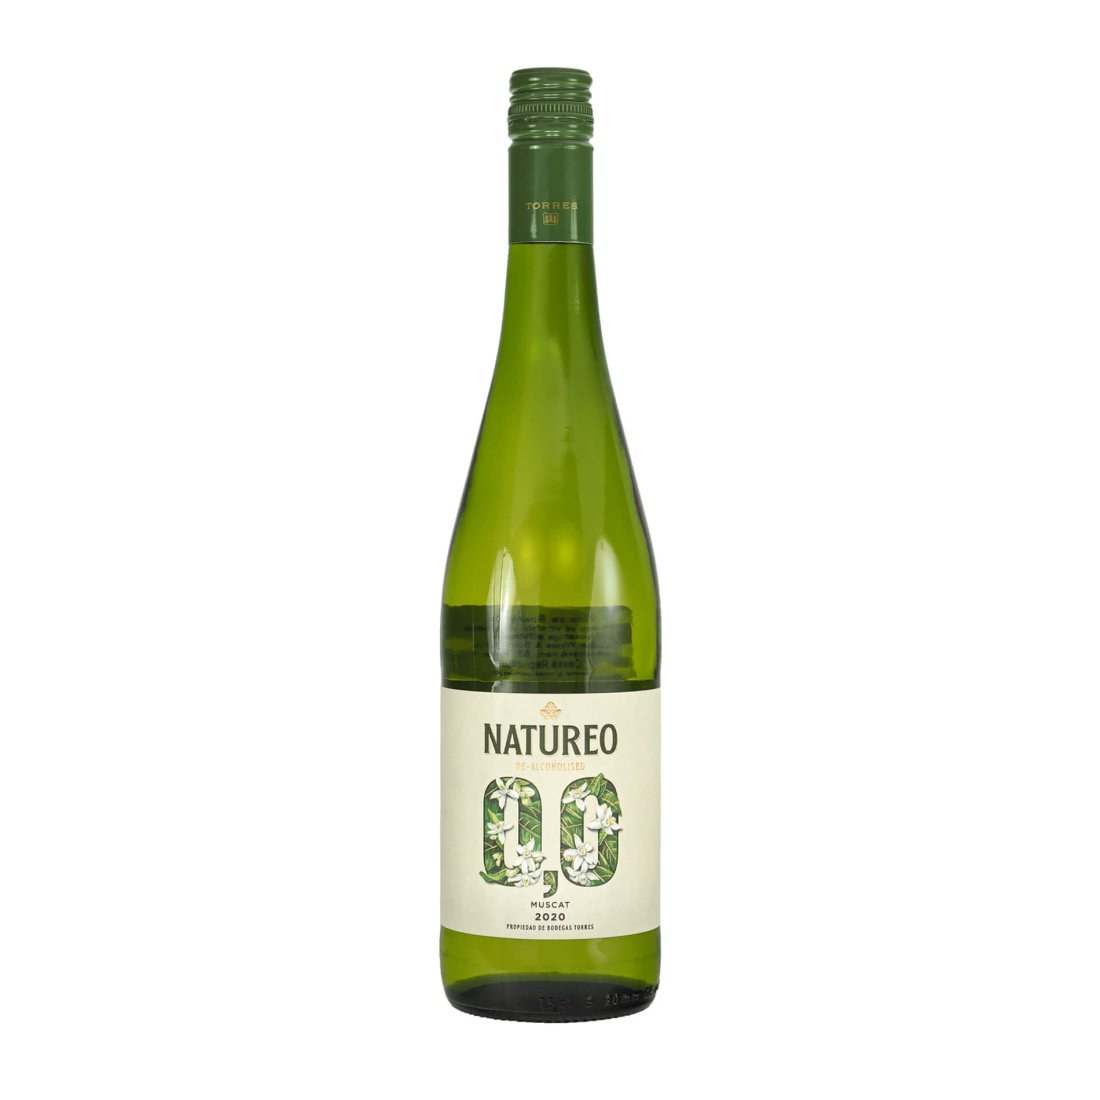 "Natureo" Muscat 2020 TORRES de-alcoholised